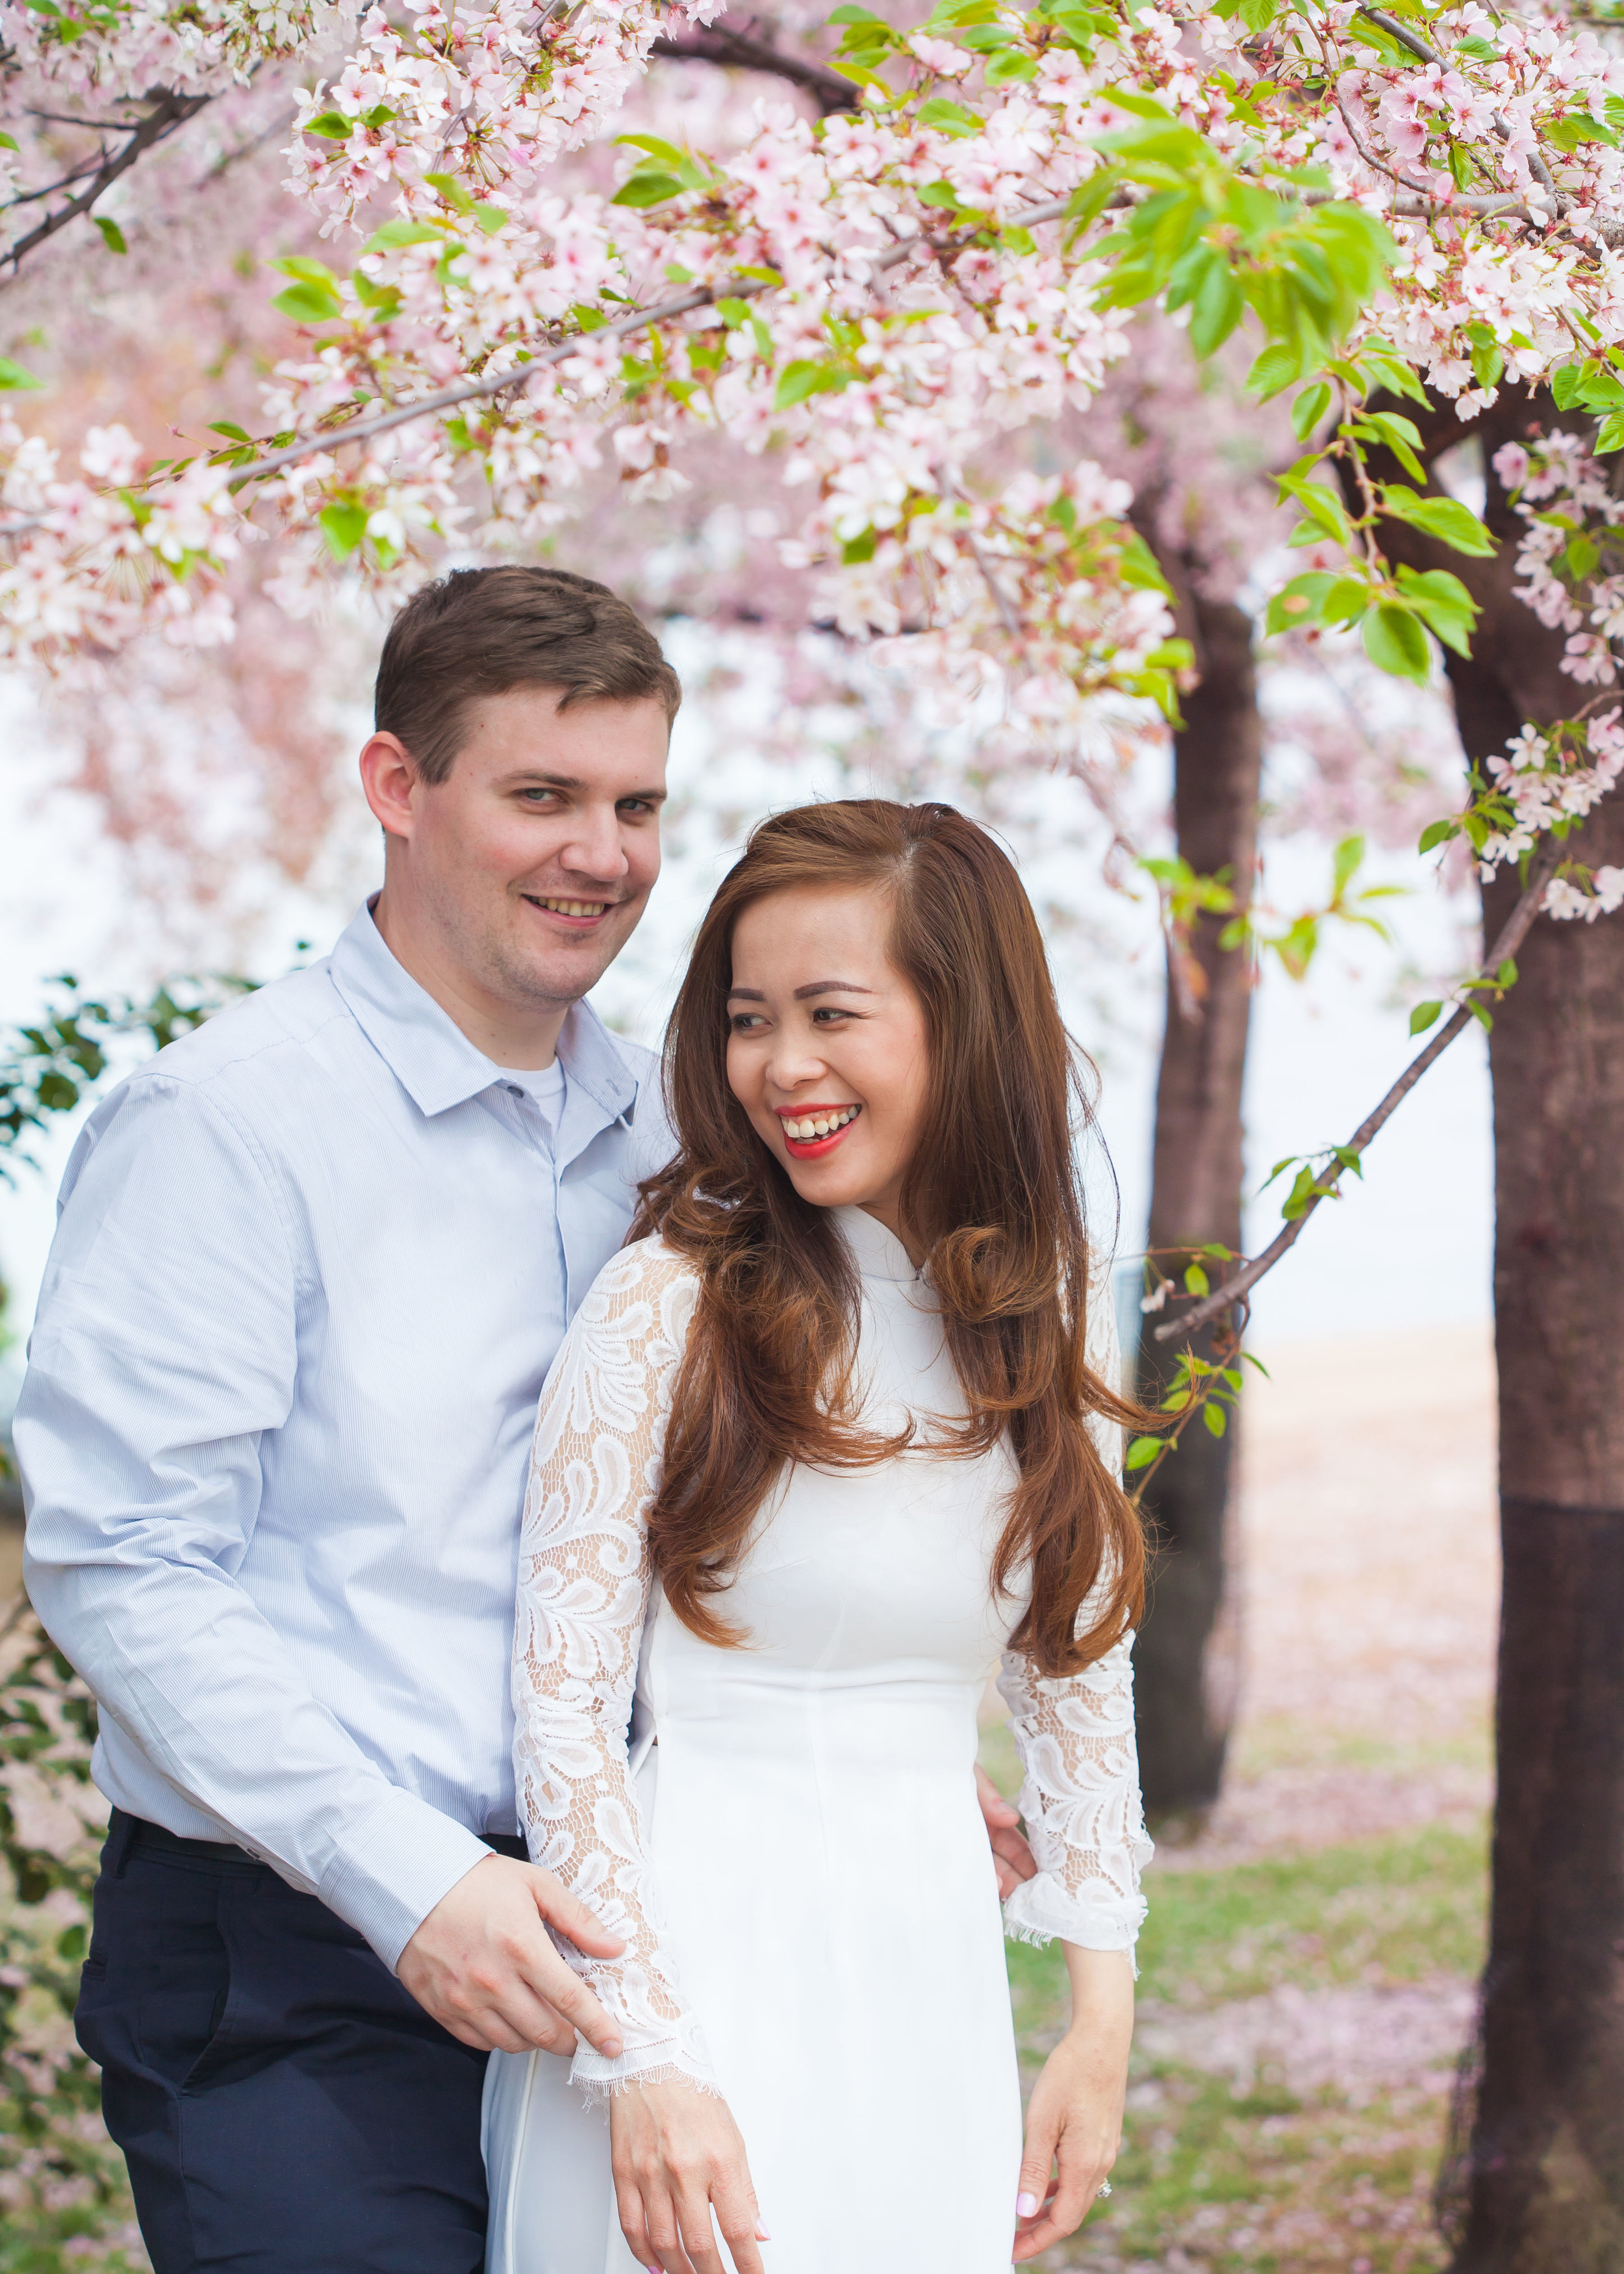 Steve & Ruby Cherry Blossom Portraits - 007.jpg